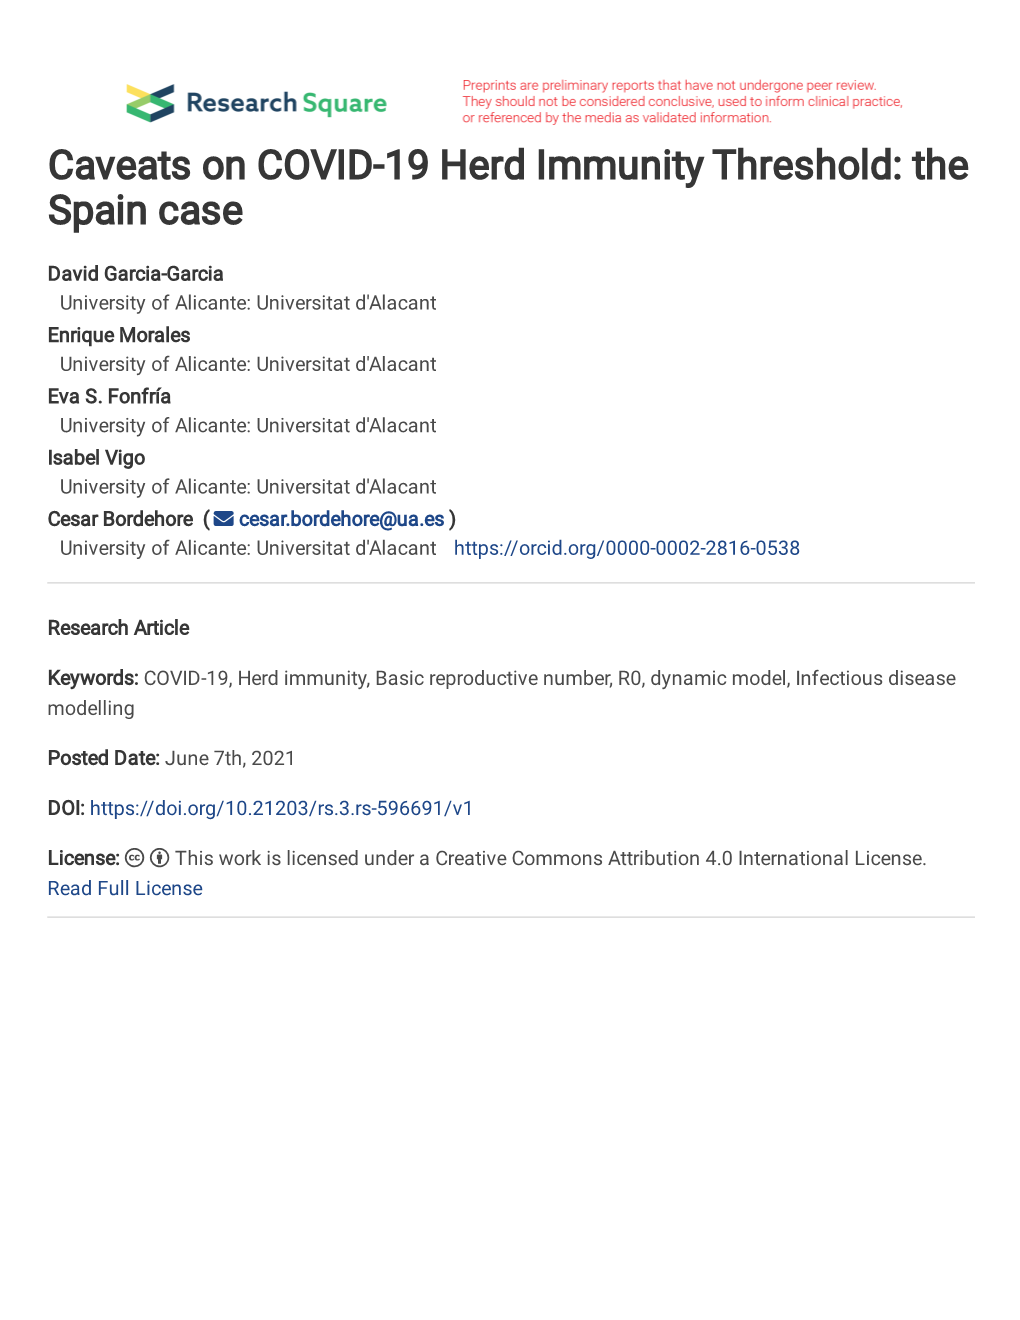 Caveats on COVID-19 Herd Immunity Threshold: the Spain Case